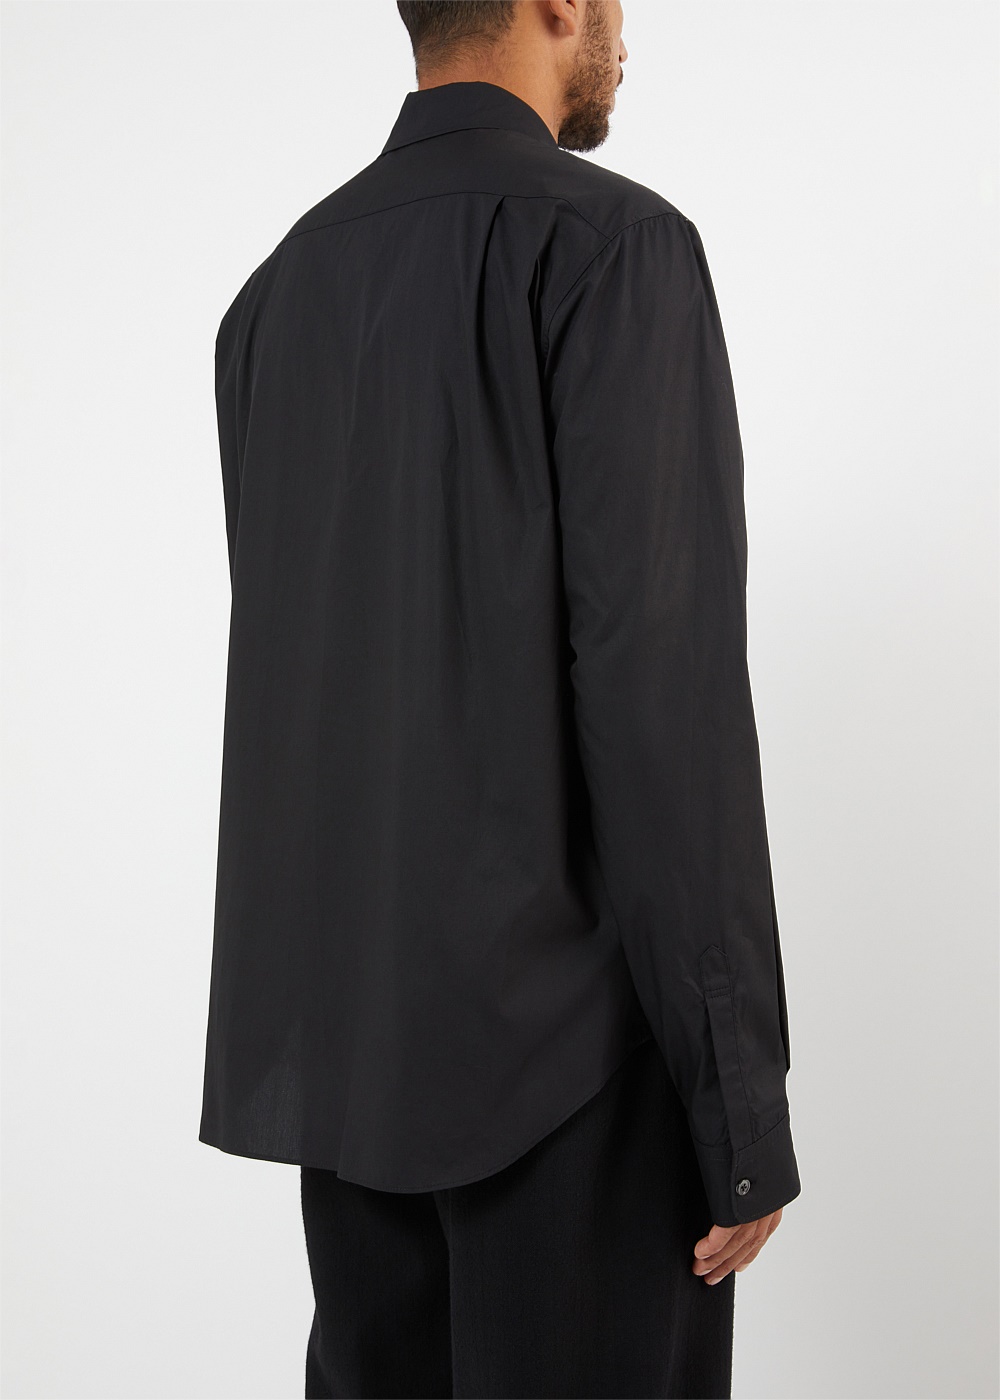 Shop Ann Demeulemeester Andre Classic Black Shirt | Harrolds Australia